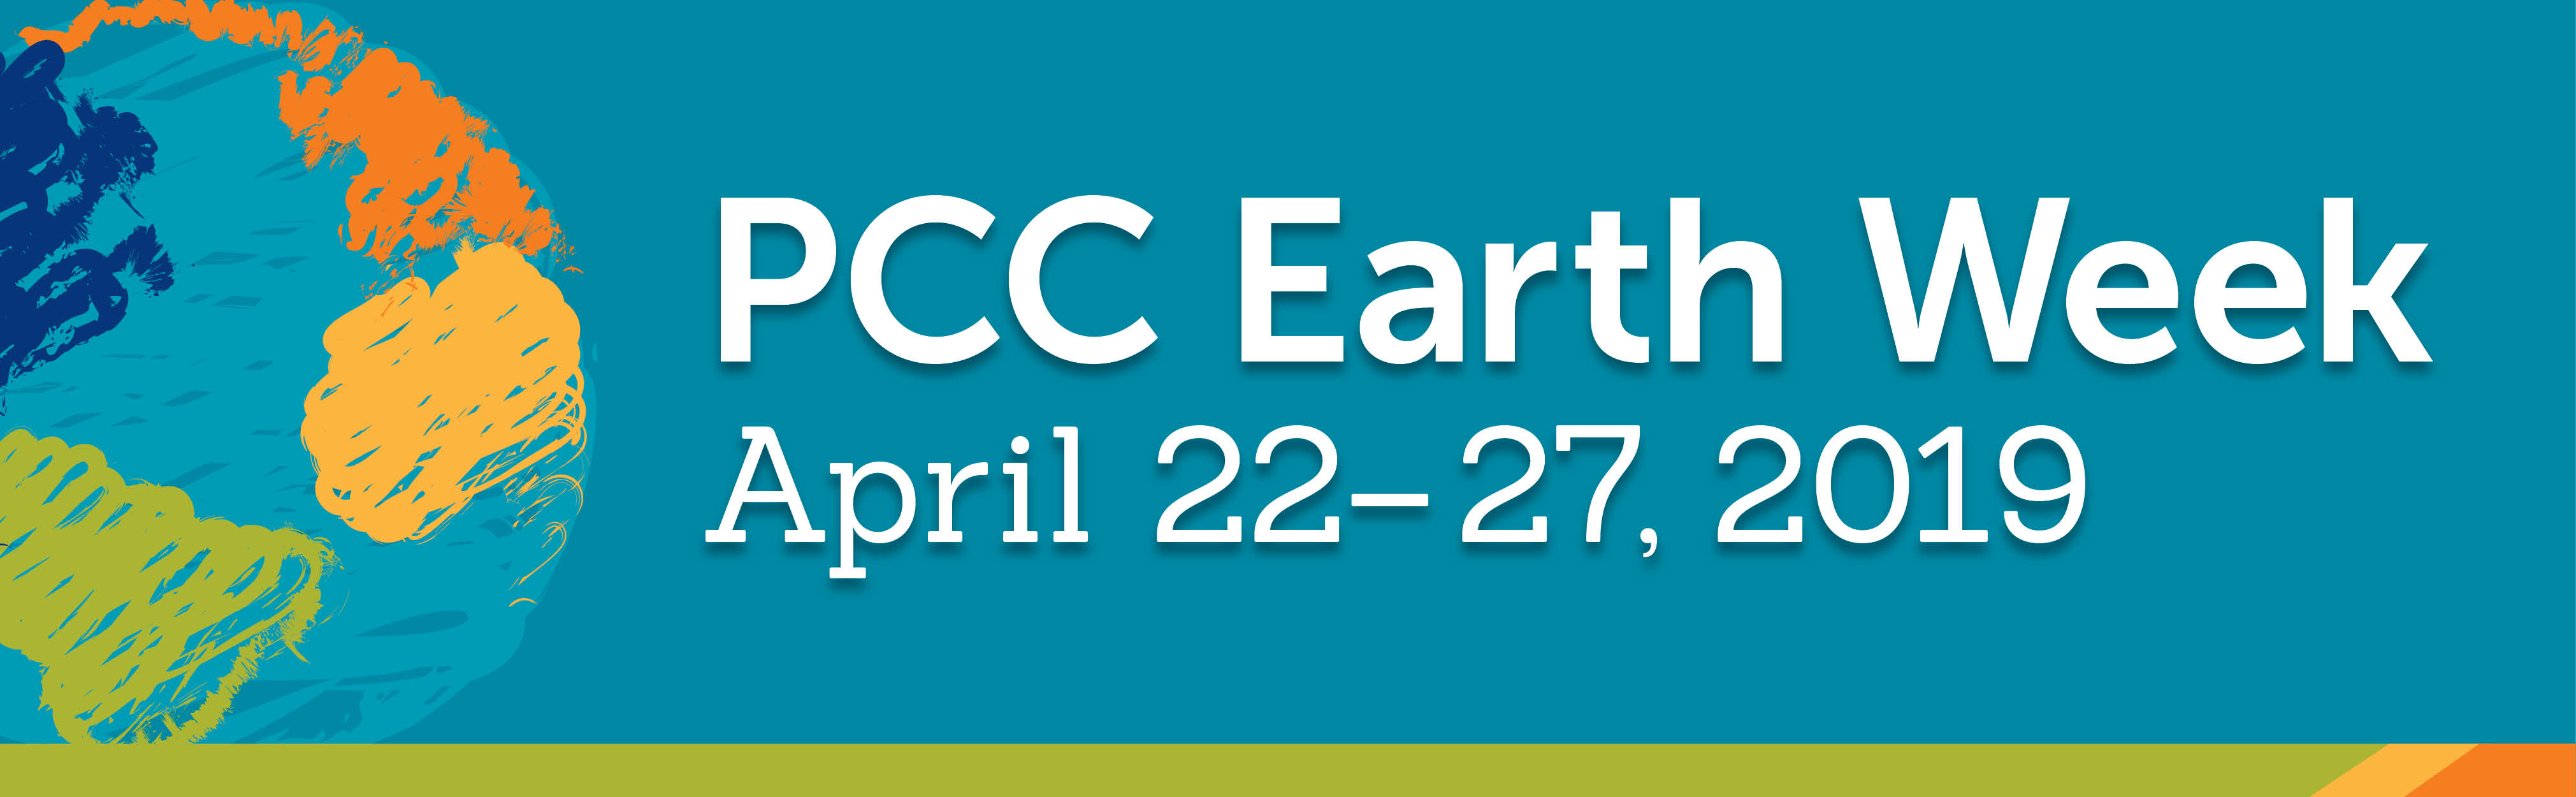 PCC Earth Week 2019